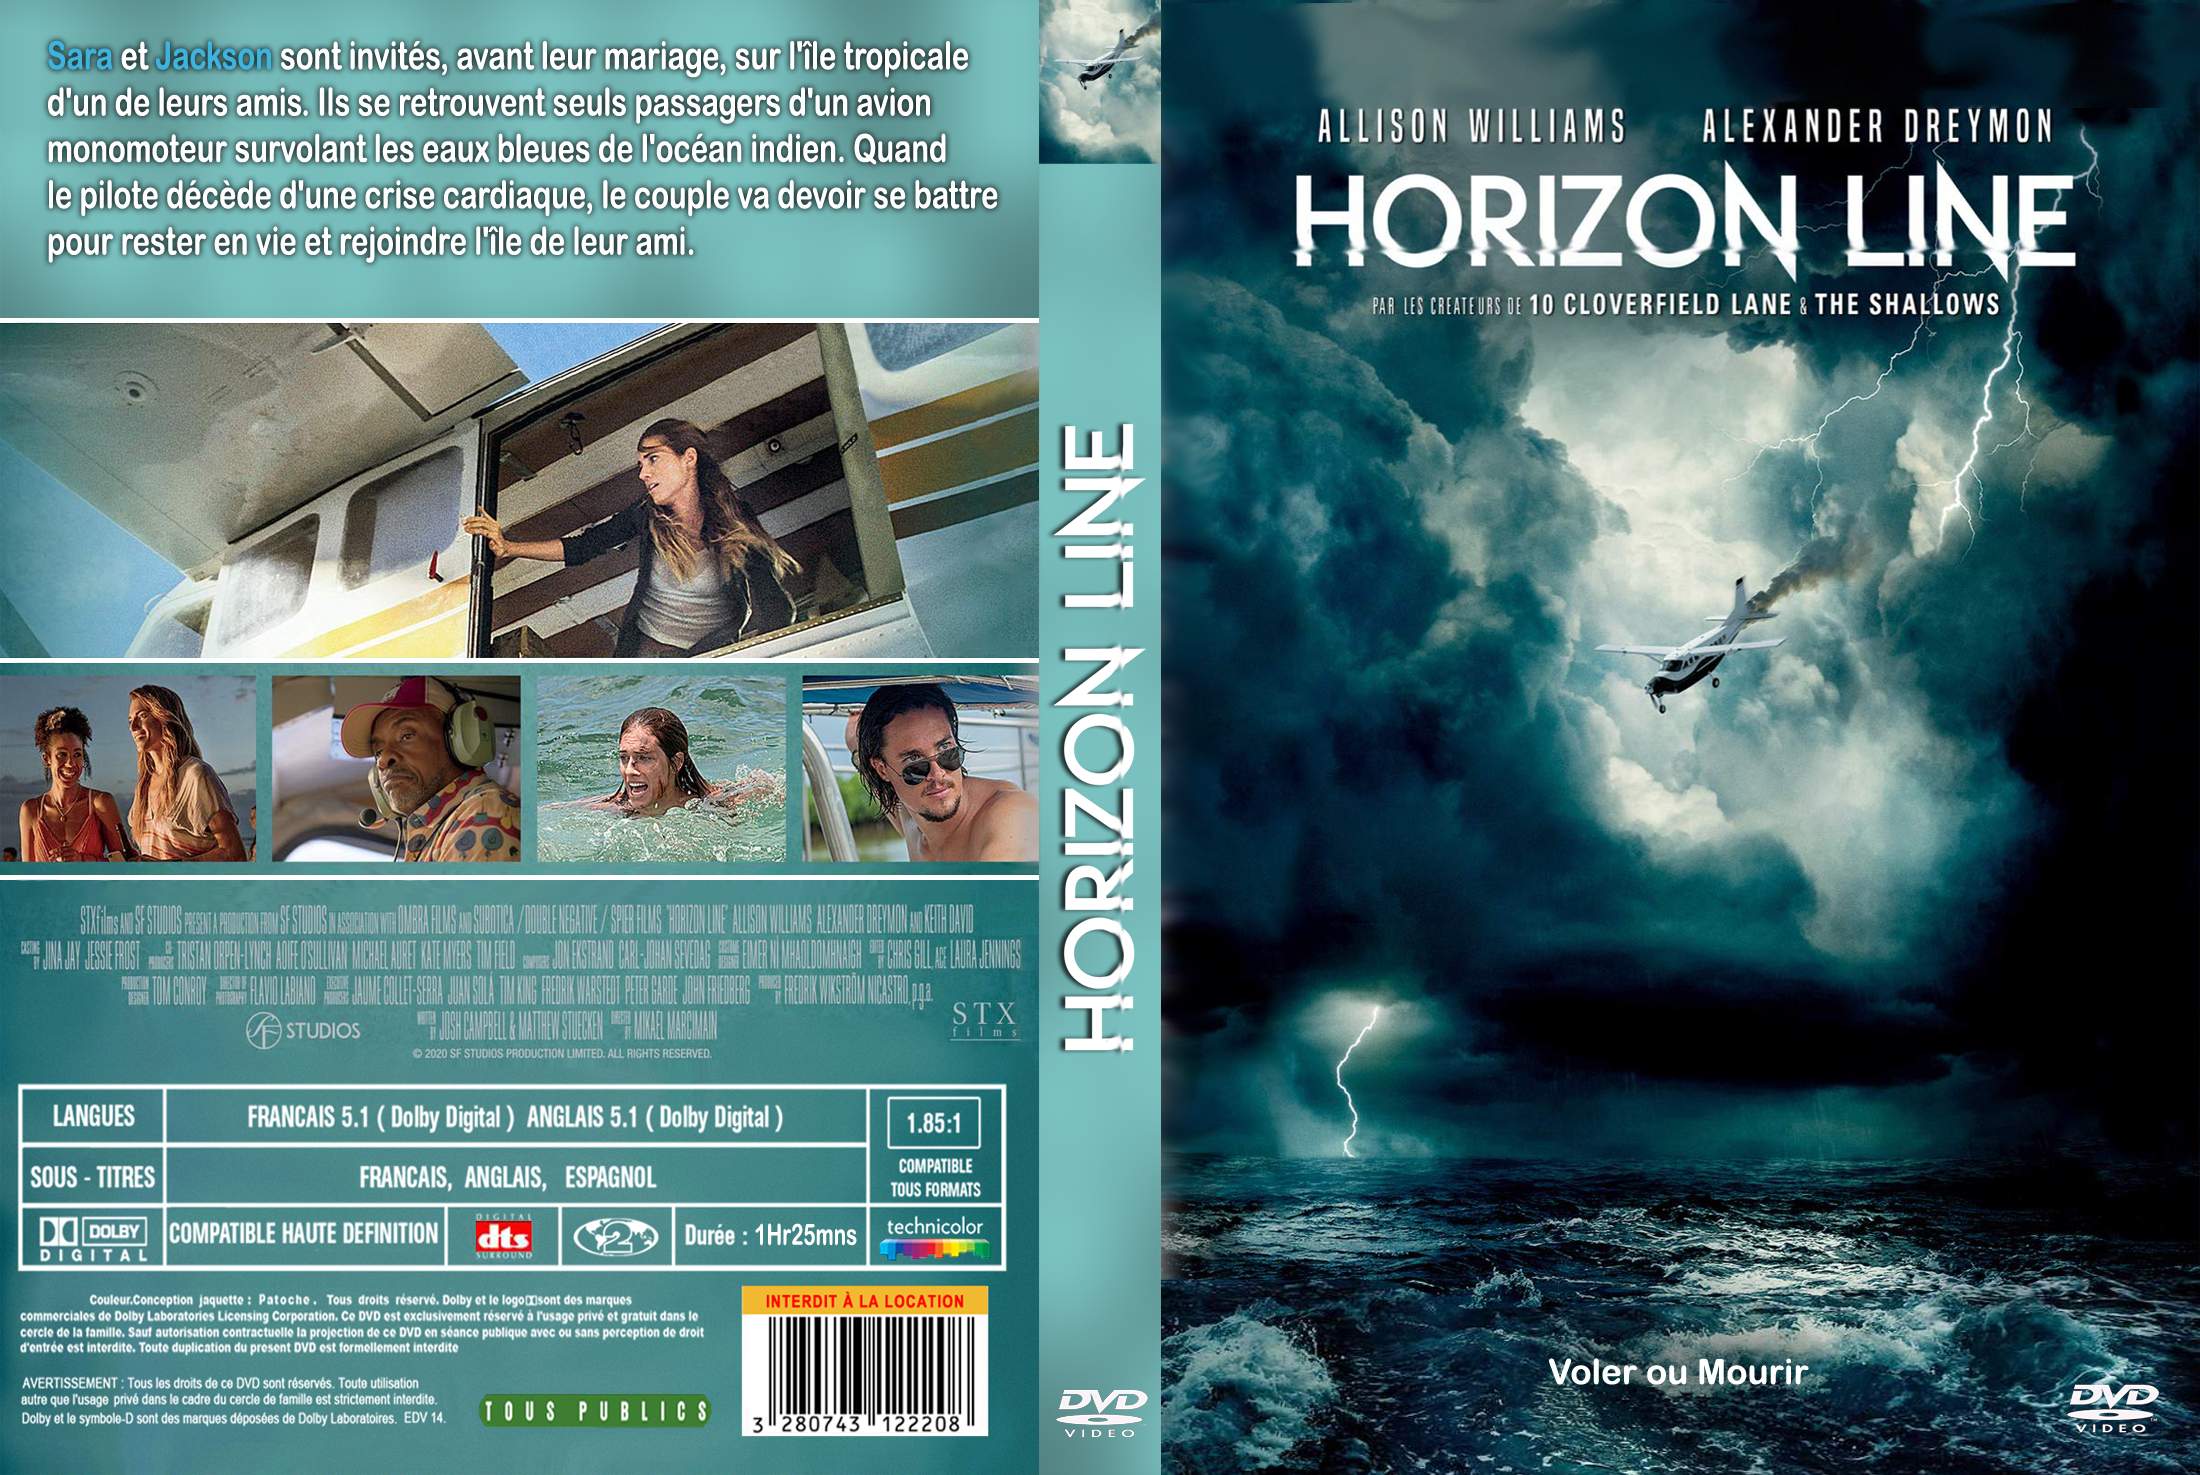 Jaquette DVD Horizon Line custom